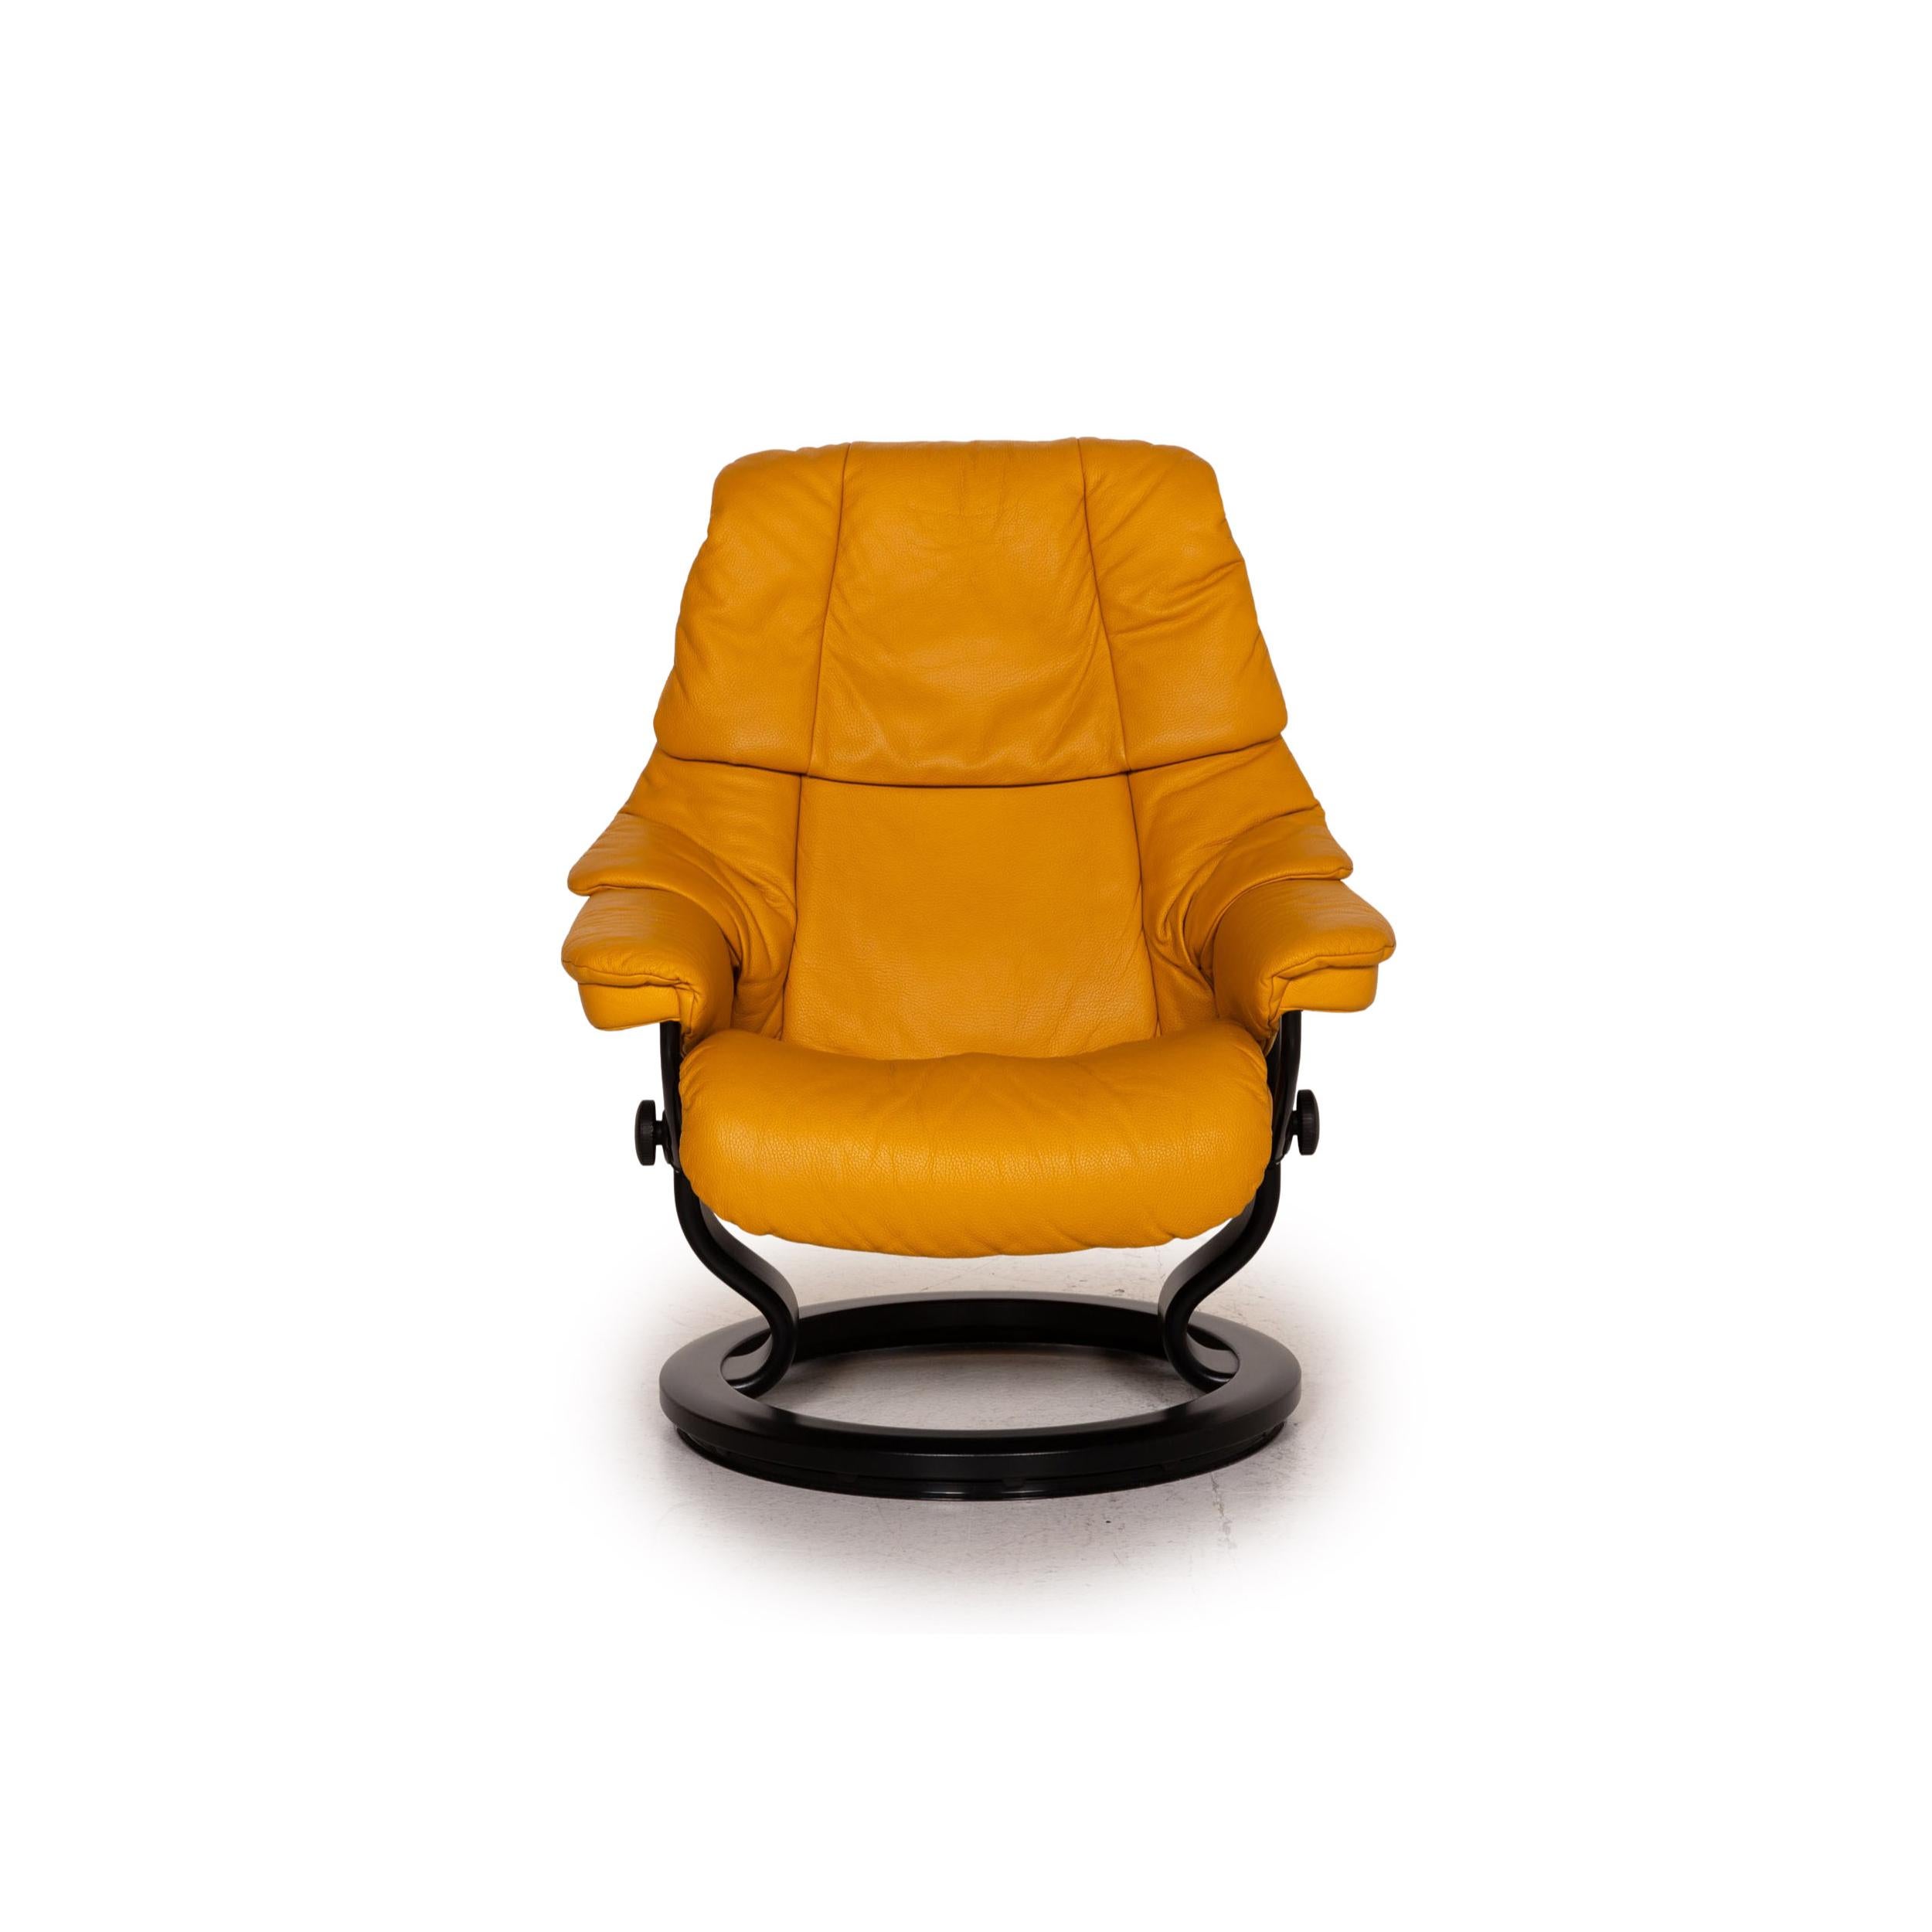 Norwegian Stressless Reno Leather Recliner Yellow Armchair